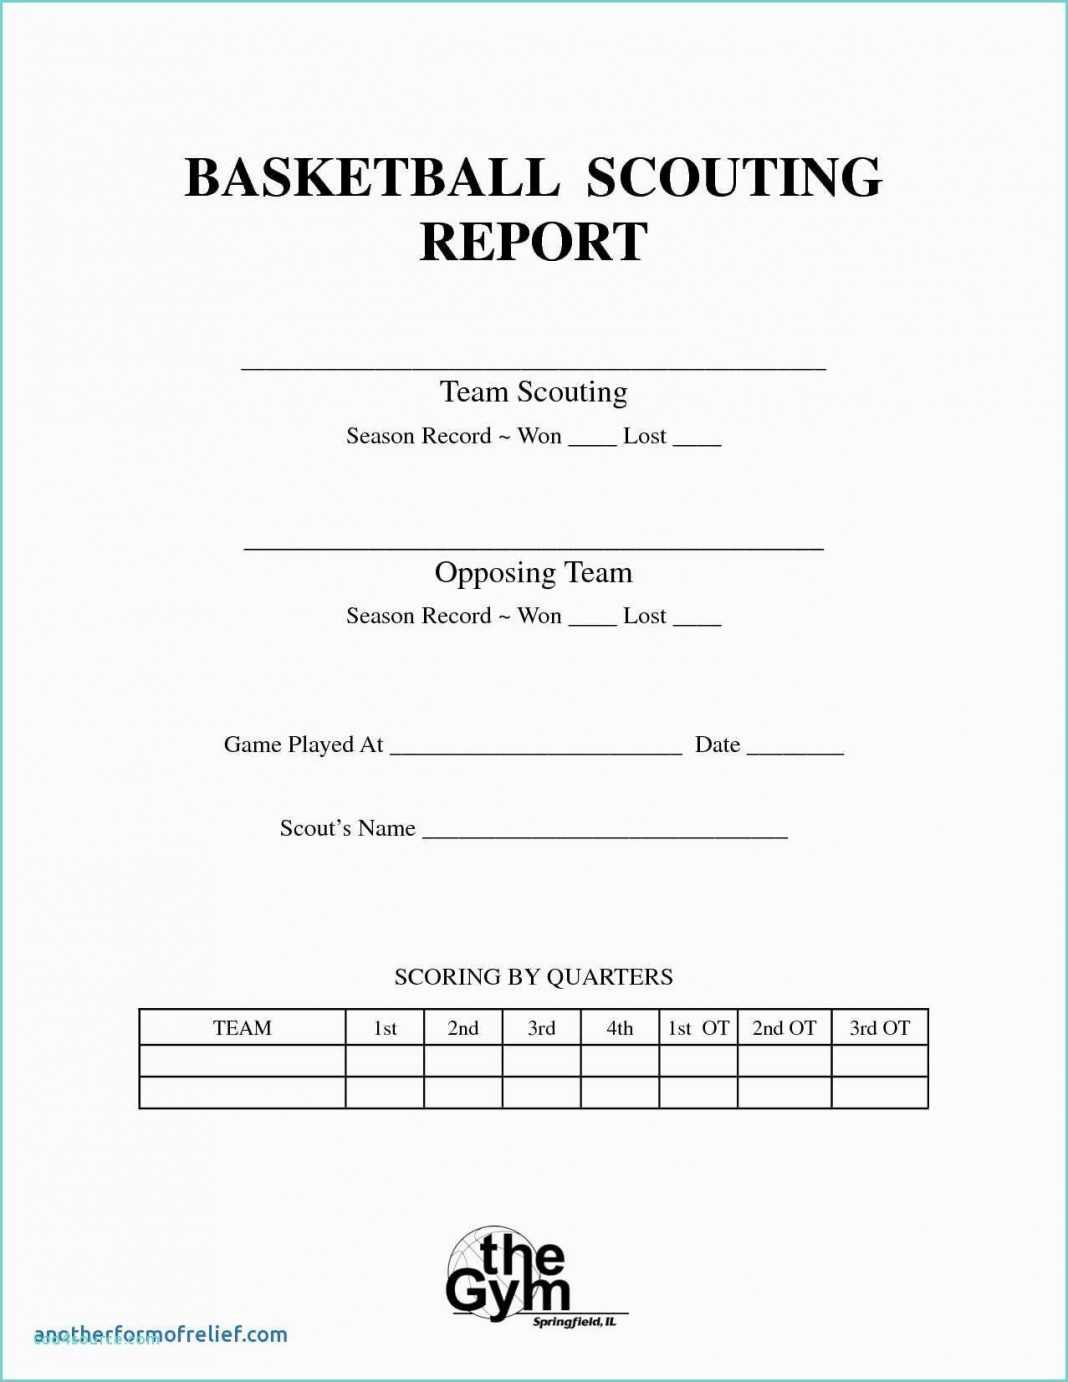 Report Examples Gamechart21 College Basketball Scouting Inside Basketball Scouting Report Template